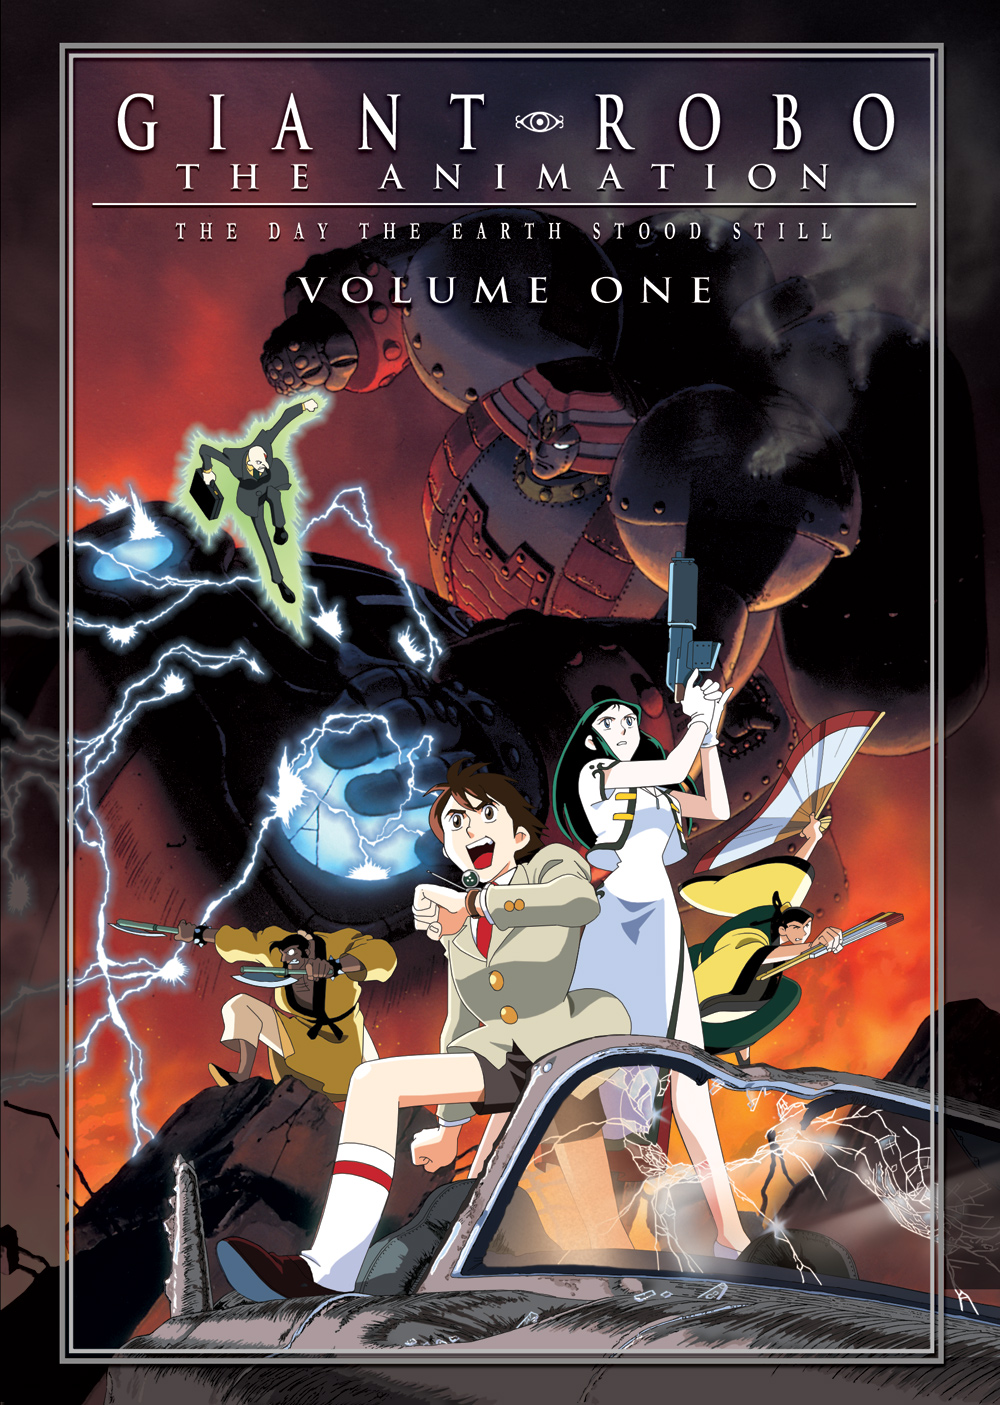 Giant Robo DVD volume 1